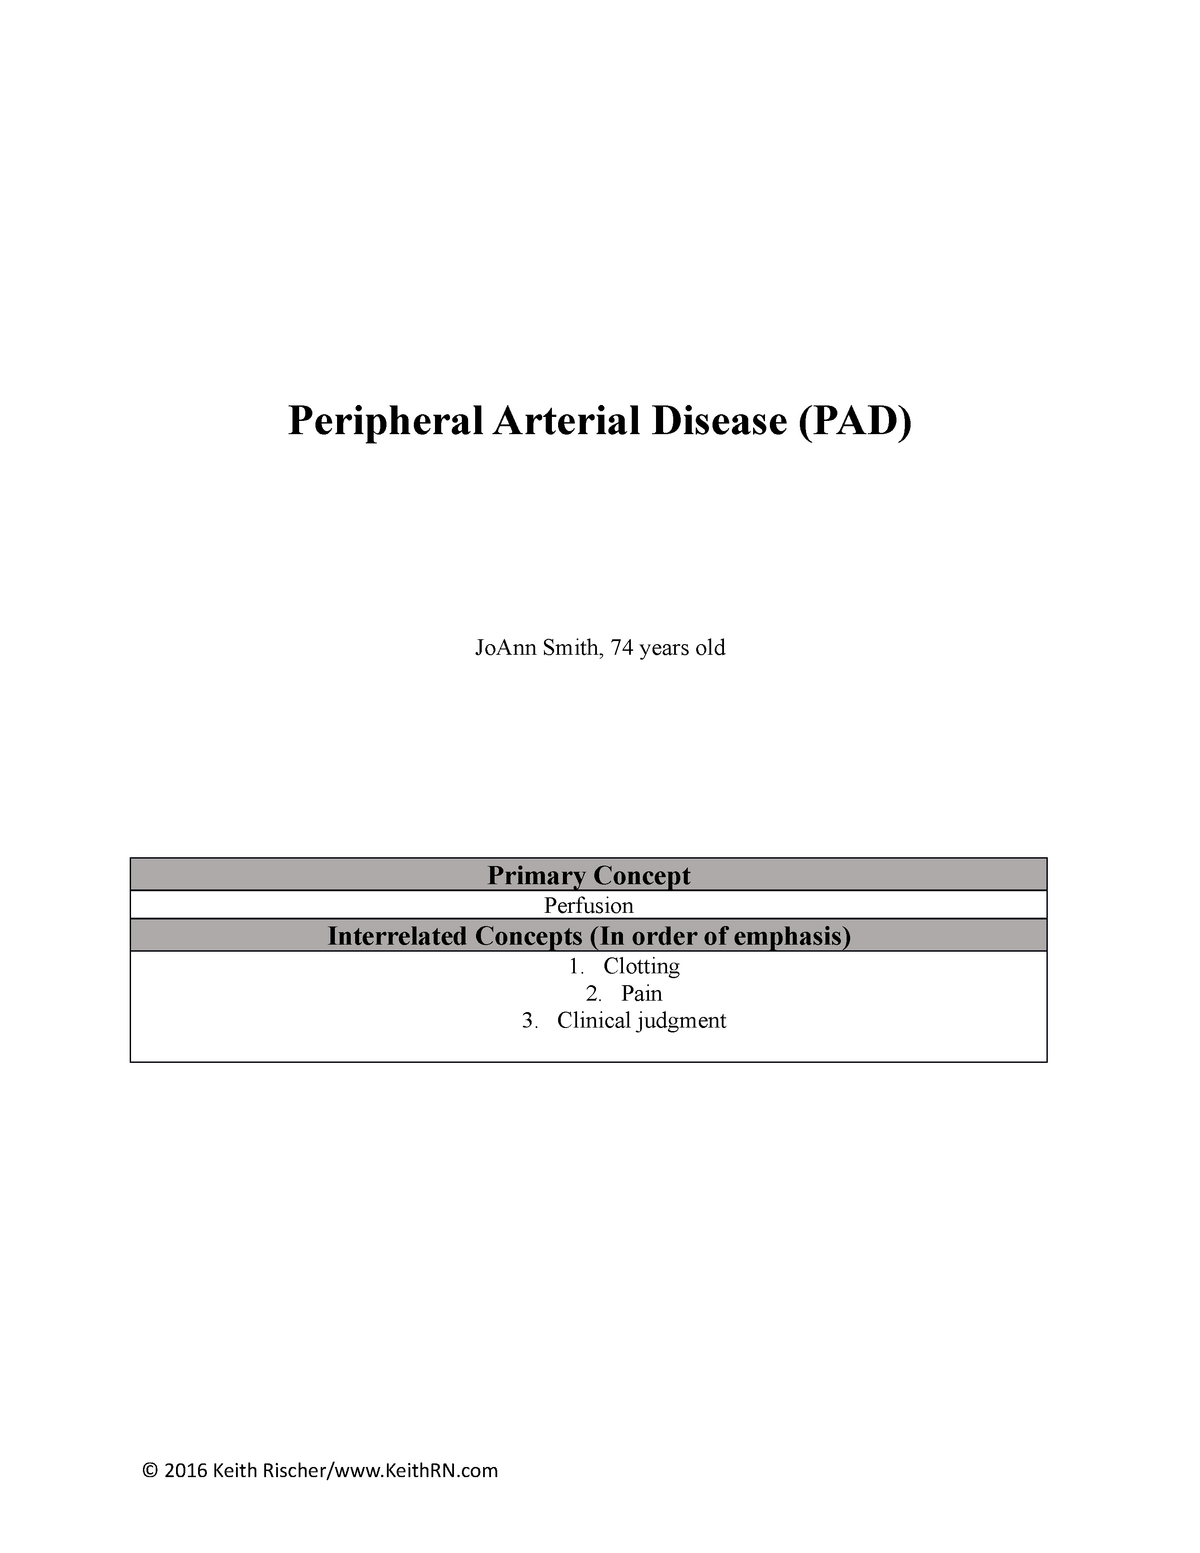 peripheral arterial disease case study examples